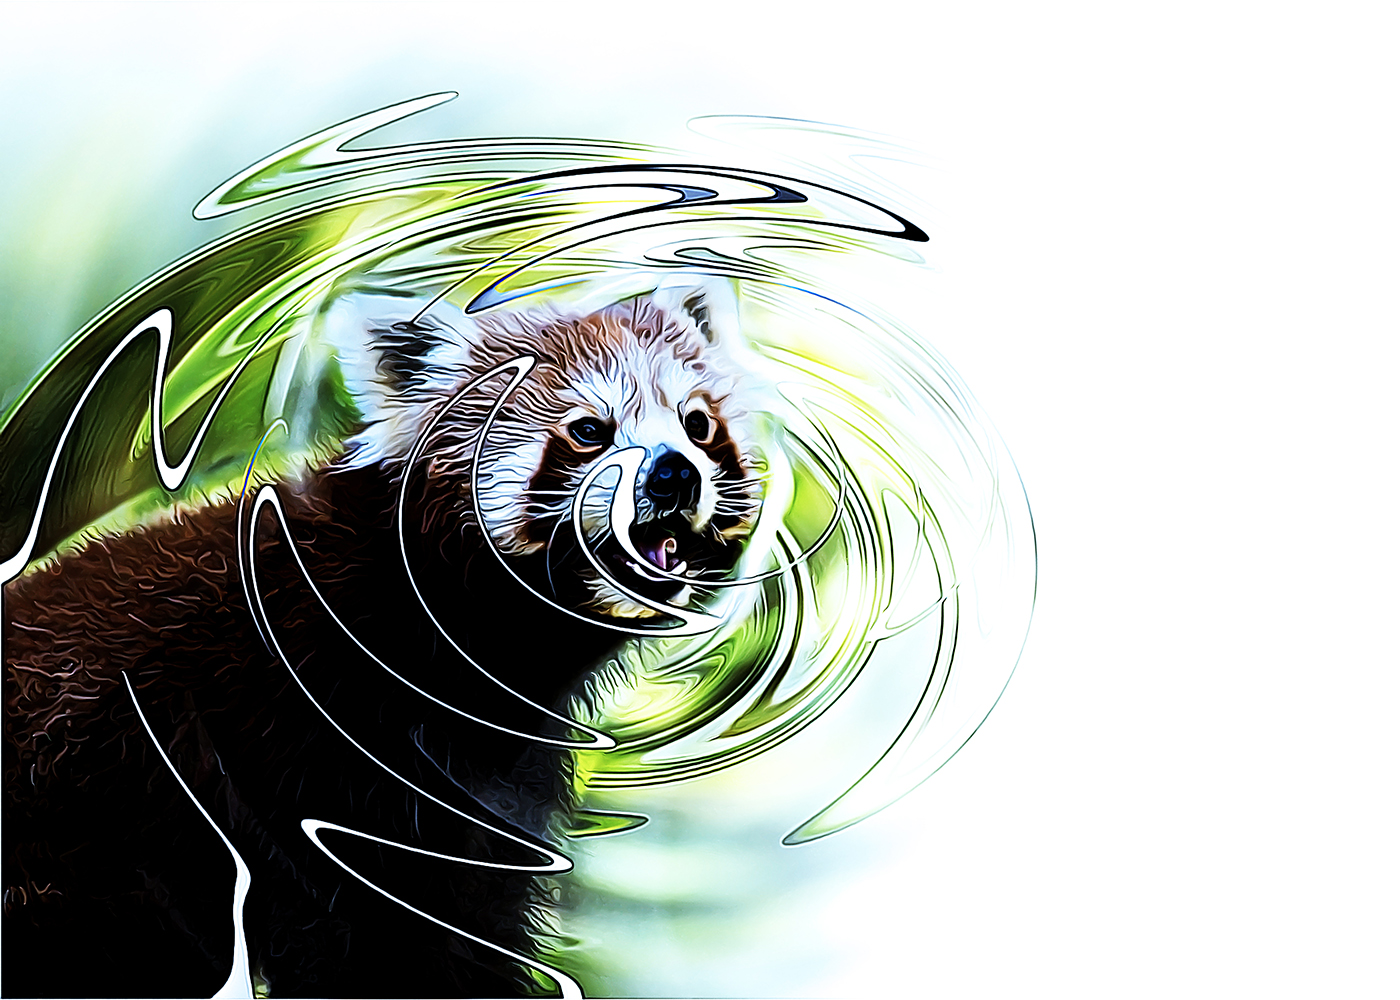 Rode panda - Red panda (ZOOM Erlebniswelt Gelsenkirchen)